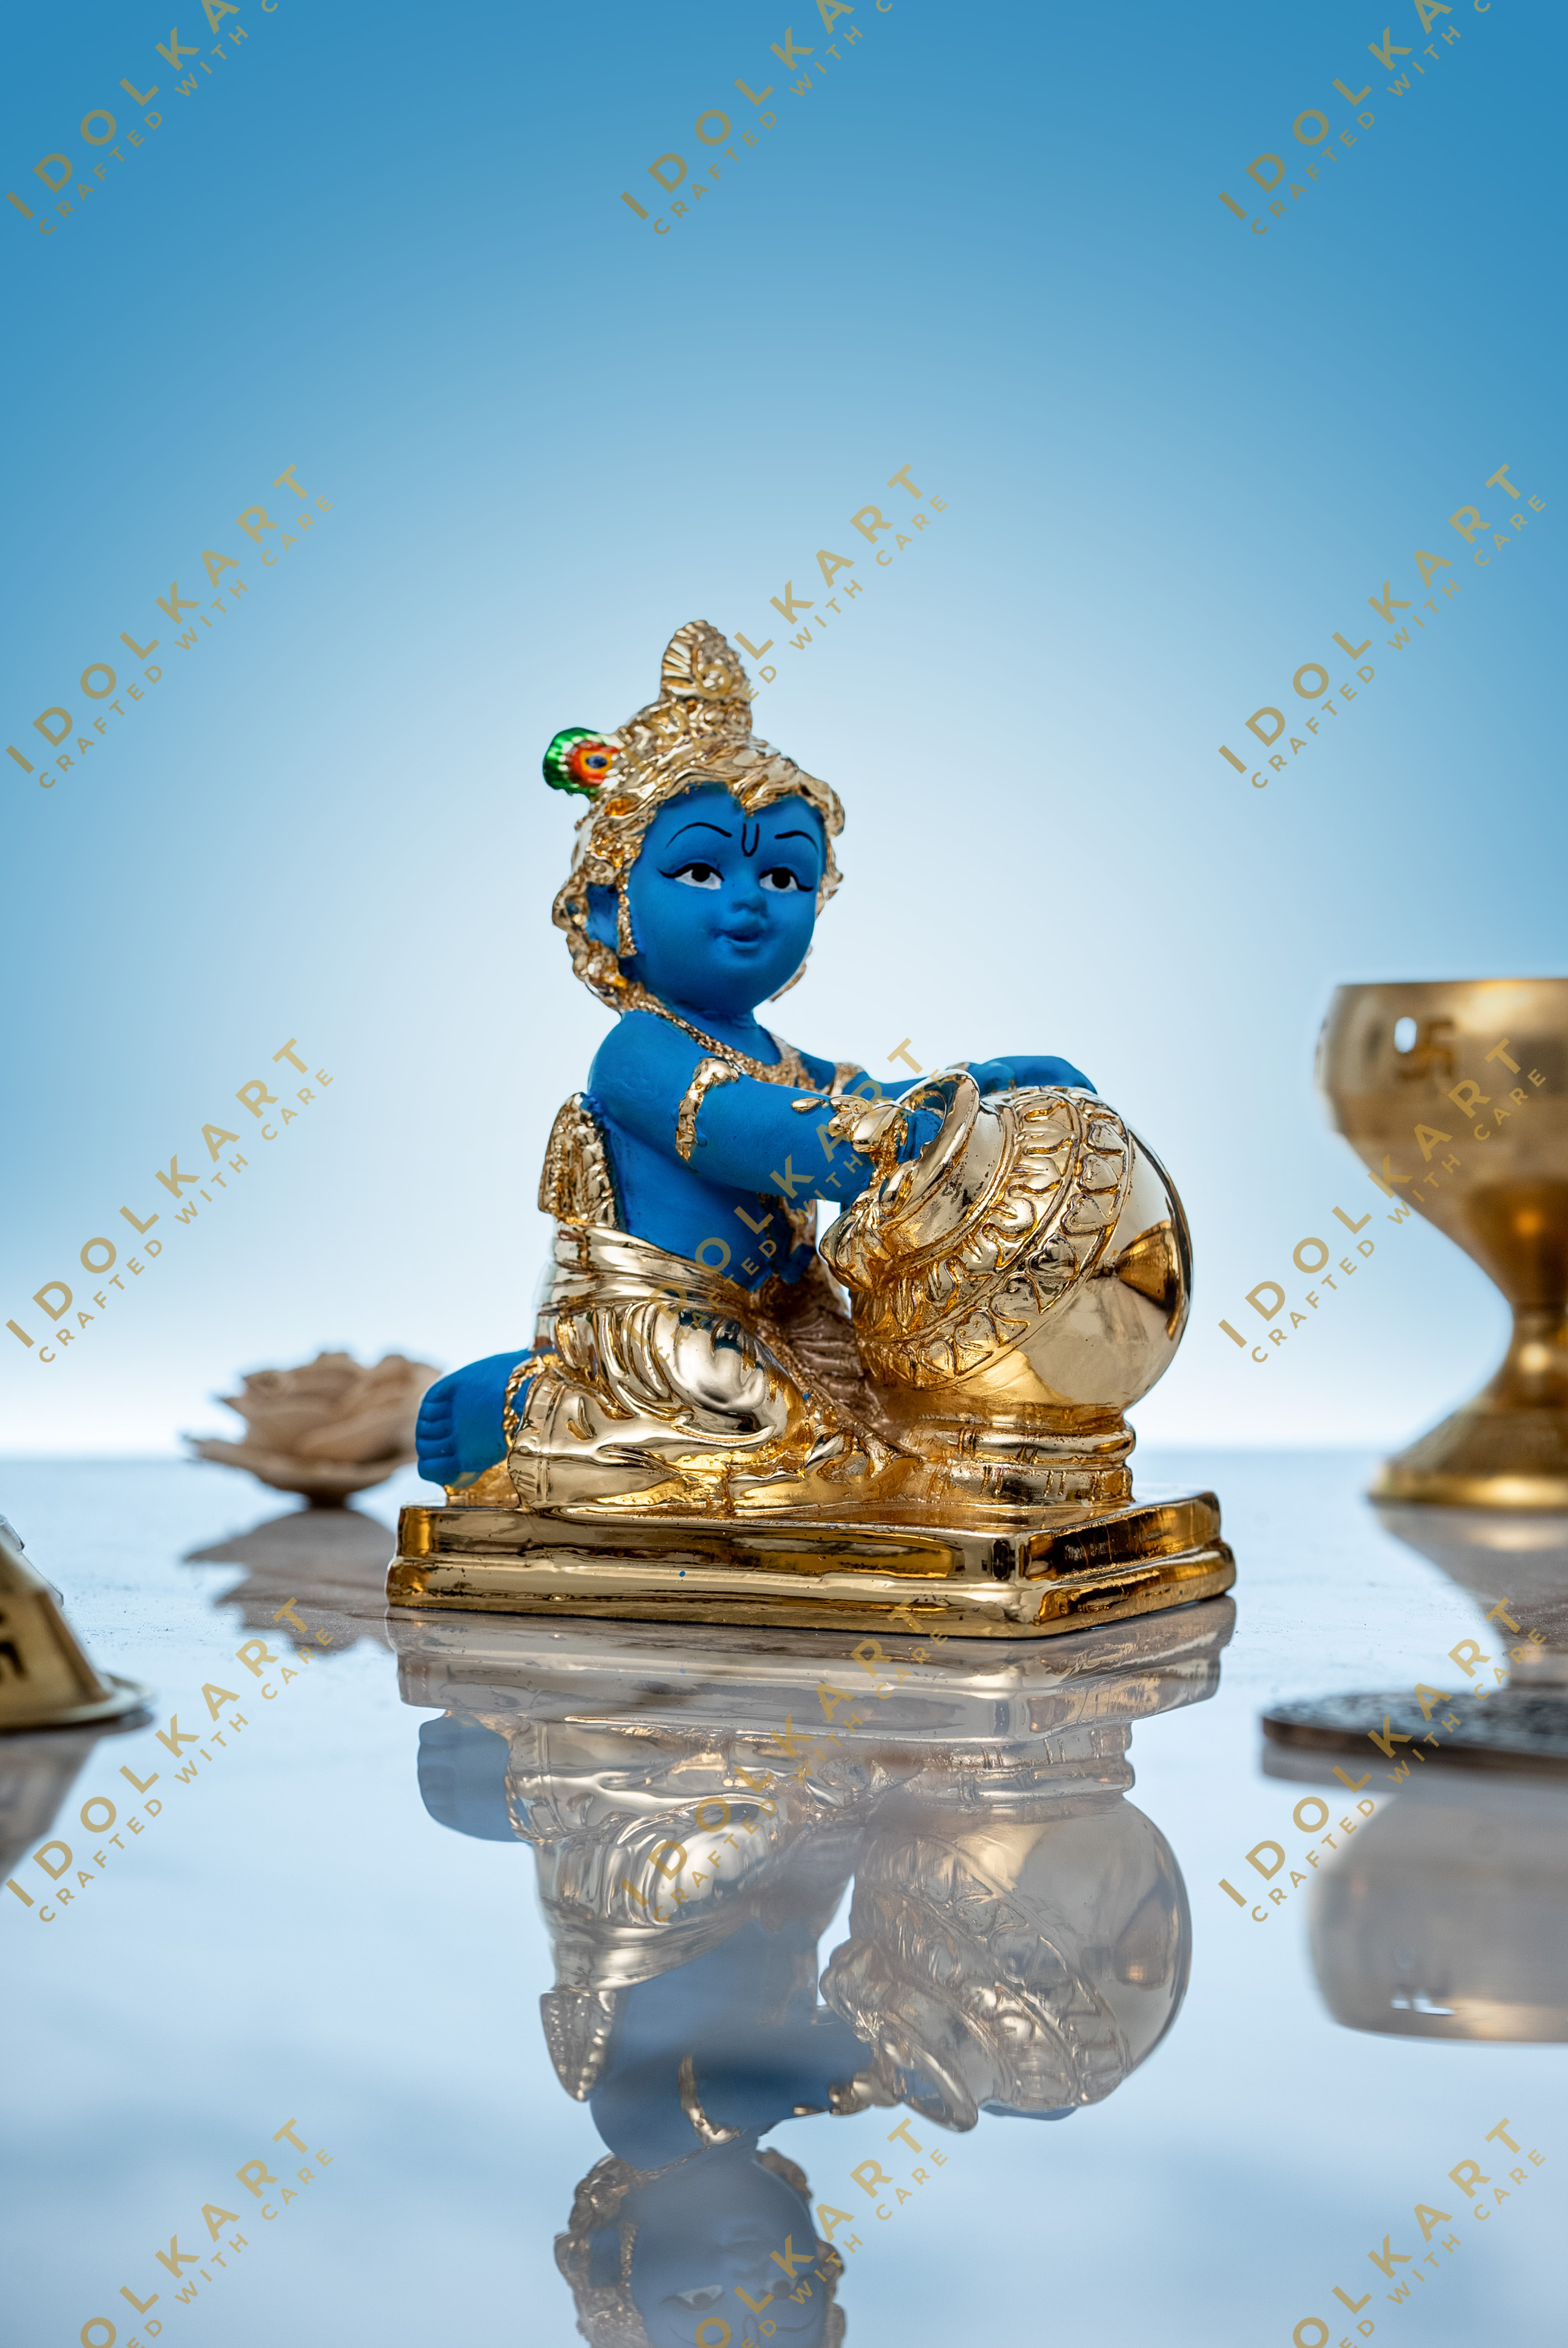 Gold Coated Makhanchor Krishna Idol